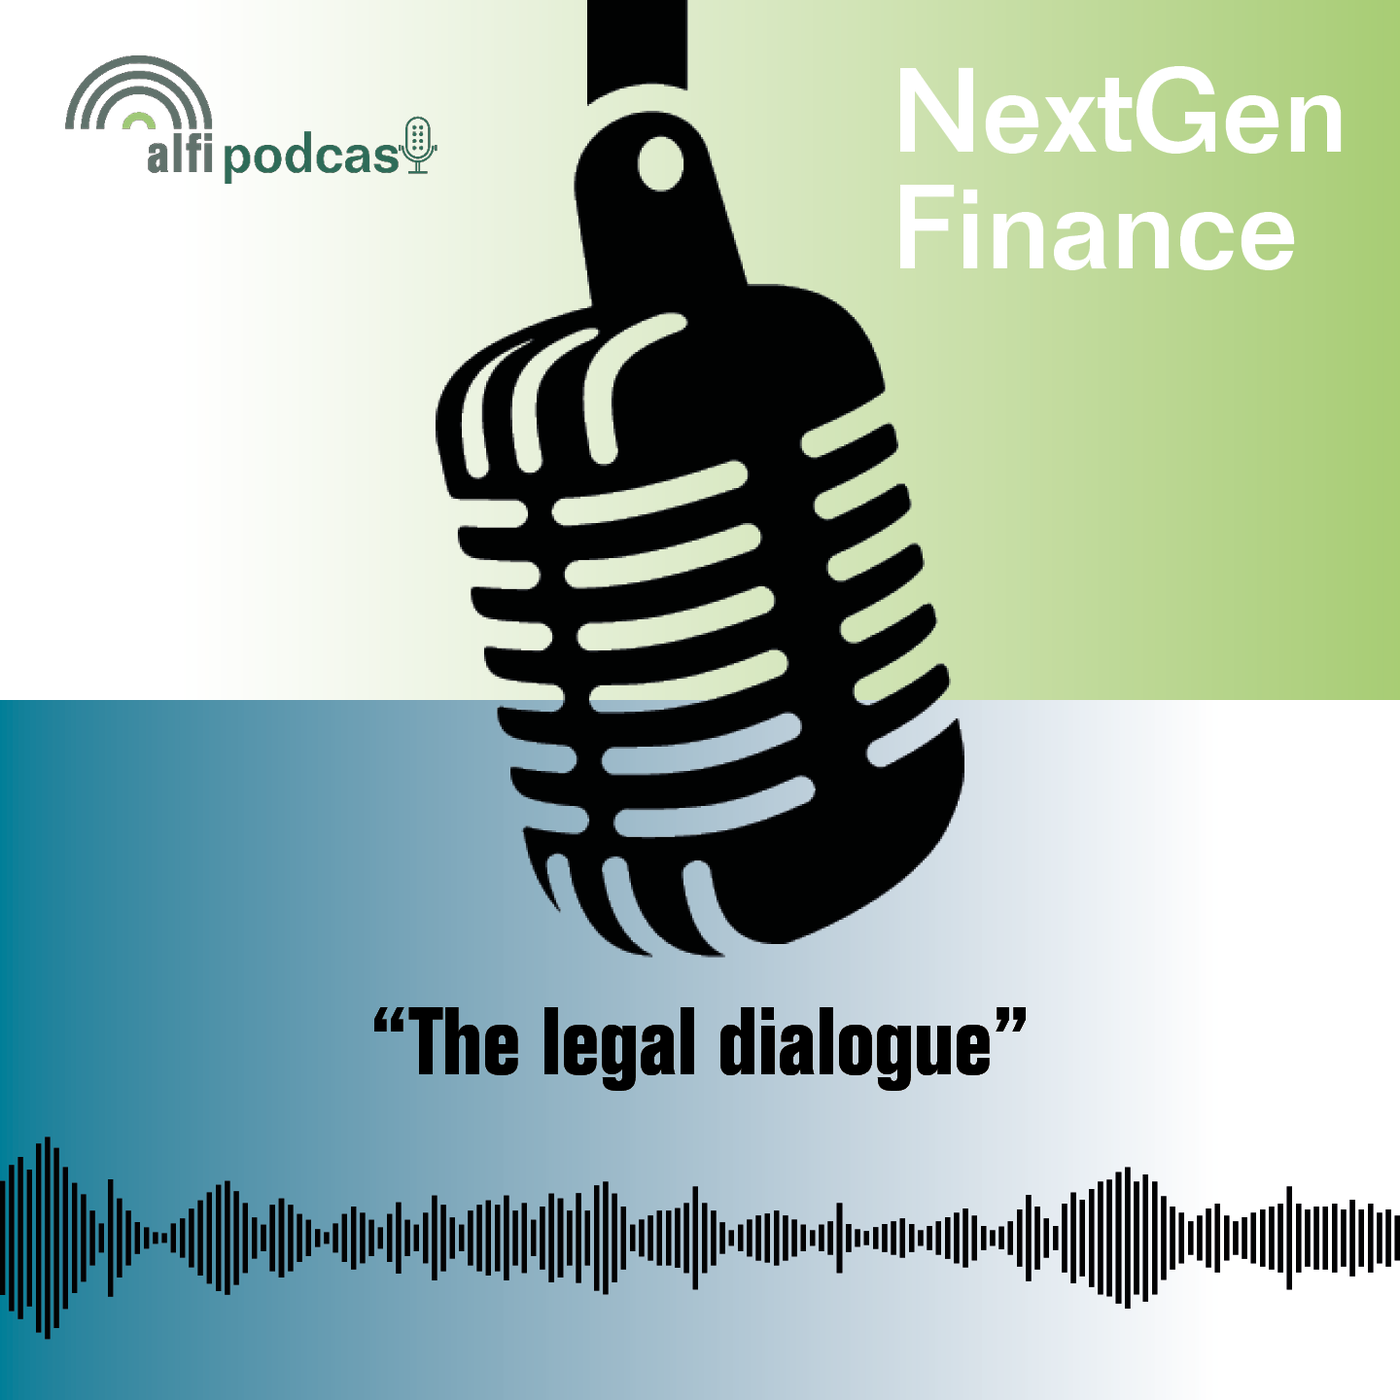 The legal dialogue